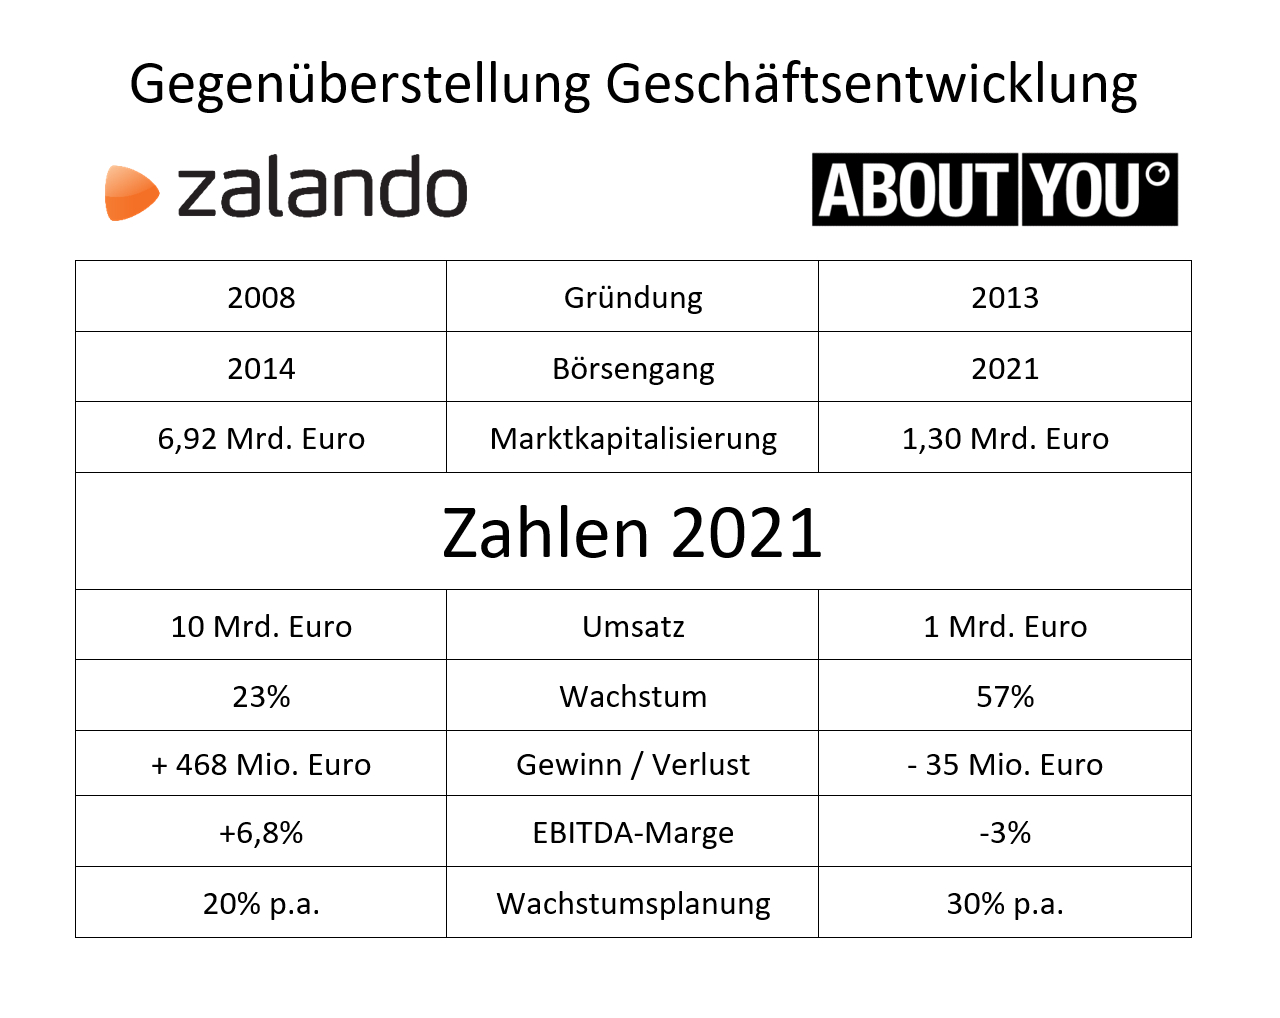 Zalando-vs-About-You_Gegenueberstellung-Geschaeftsentwicklung